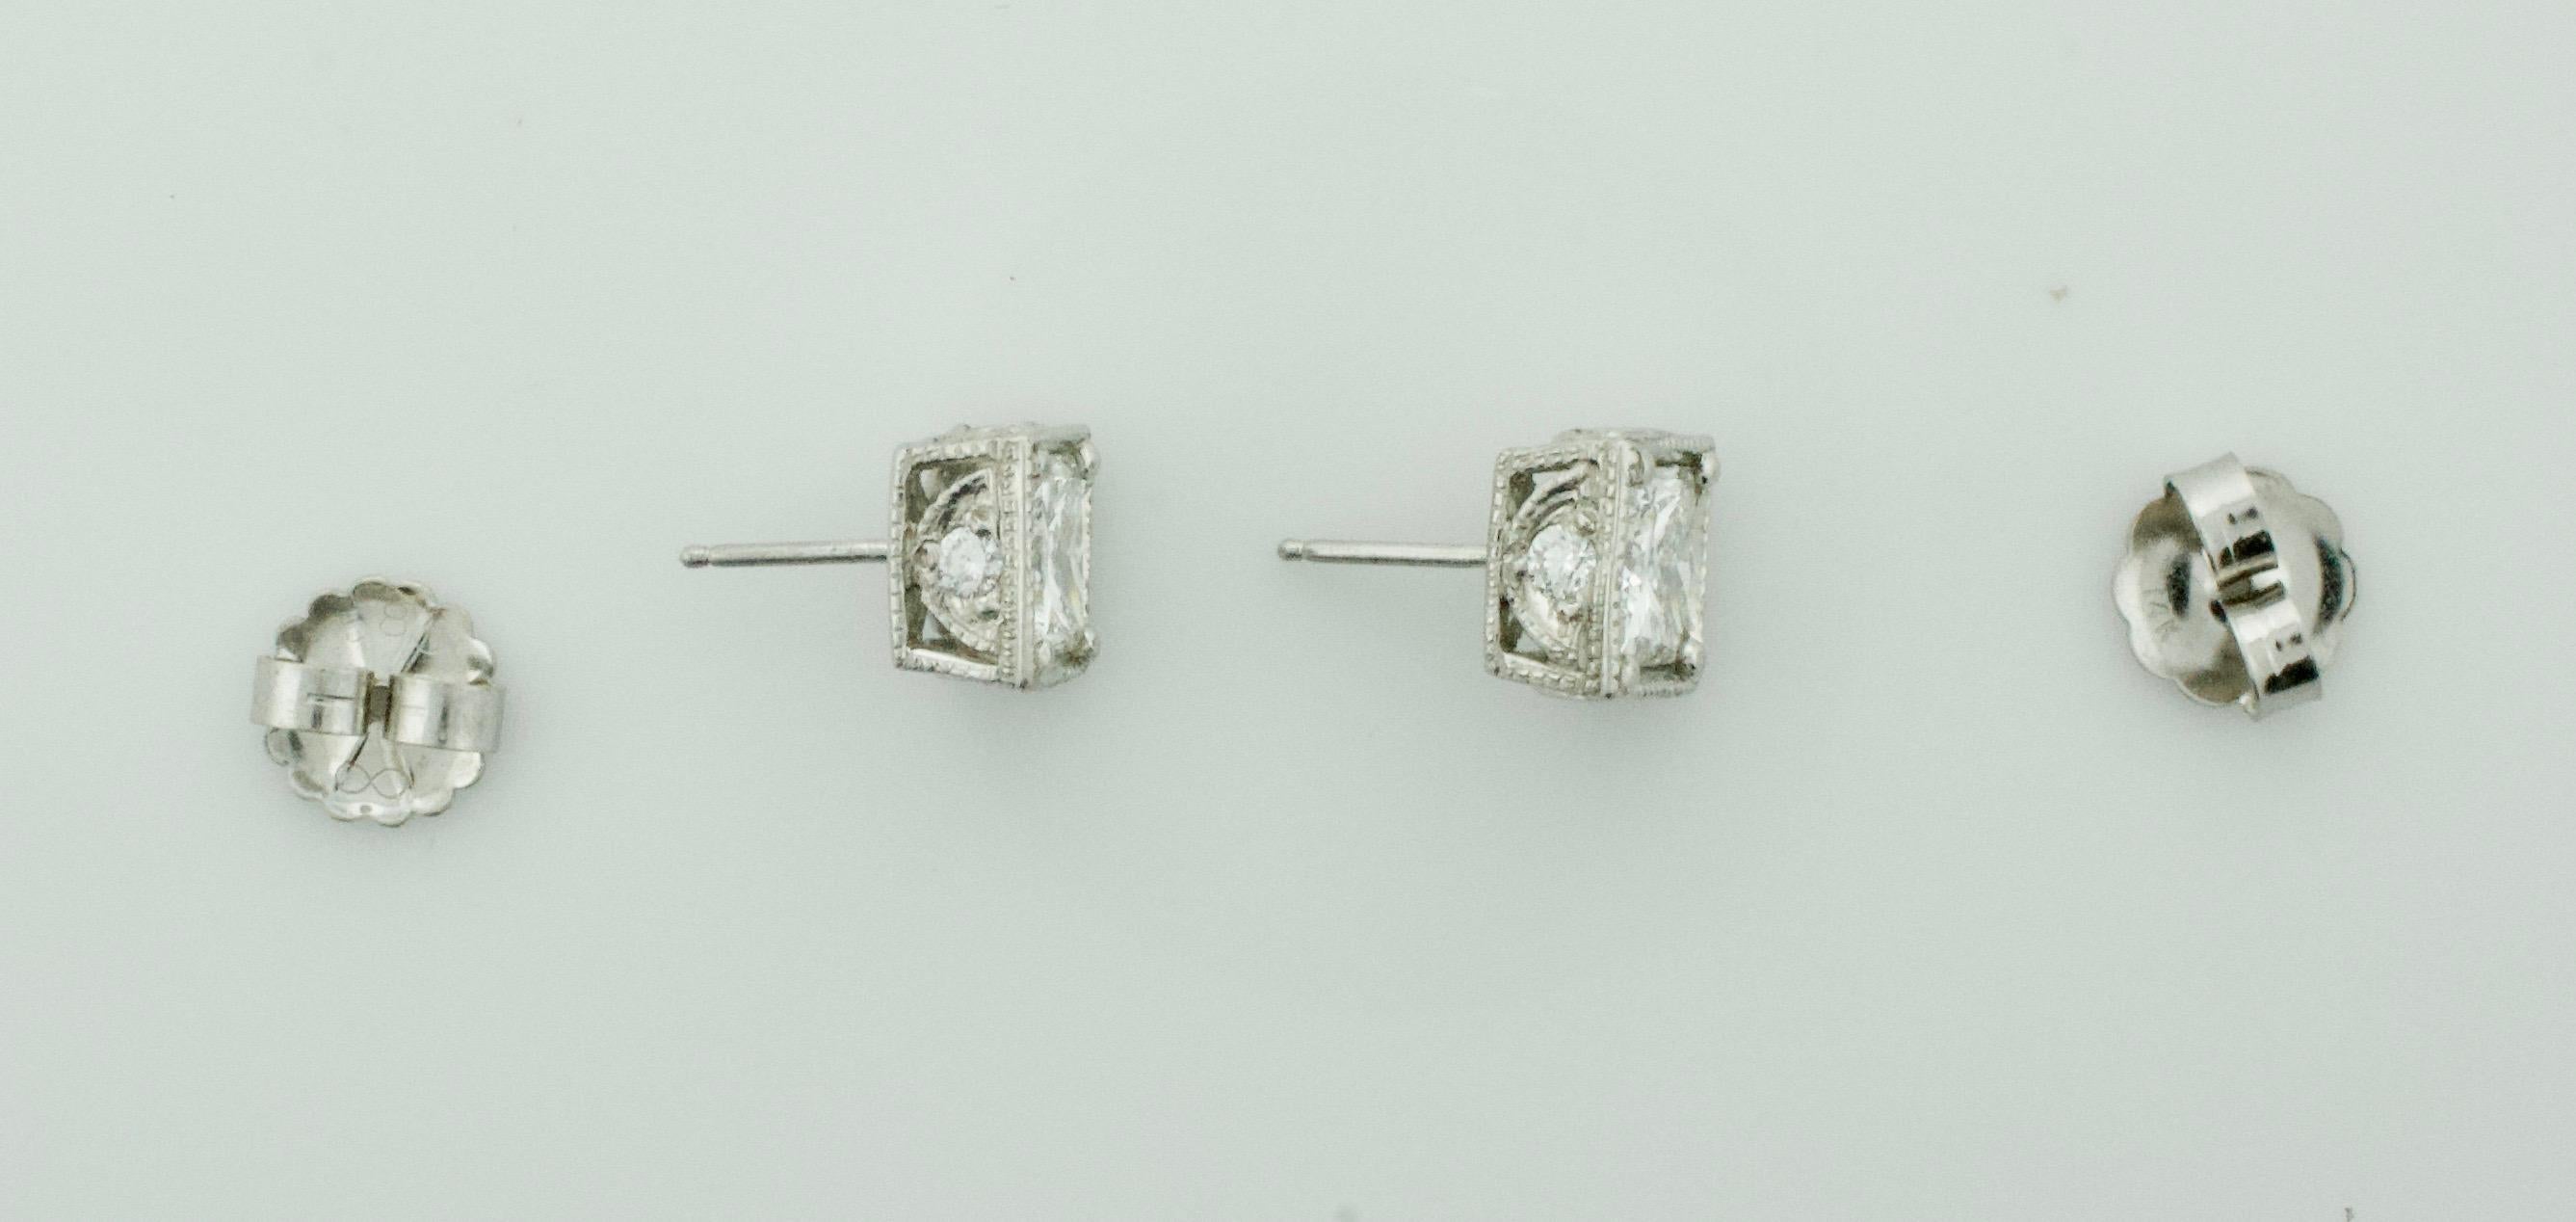 Large Princess Cut Diamond Stud Earrings in Platinum 5.10 Carat H-I SI1 GIA 2